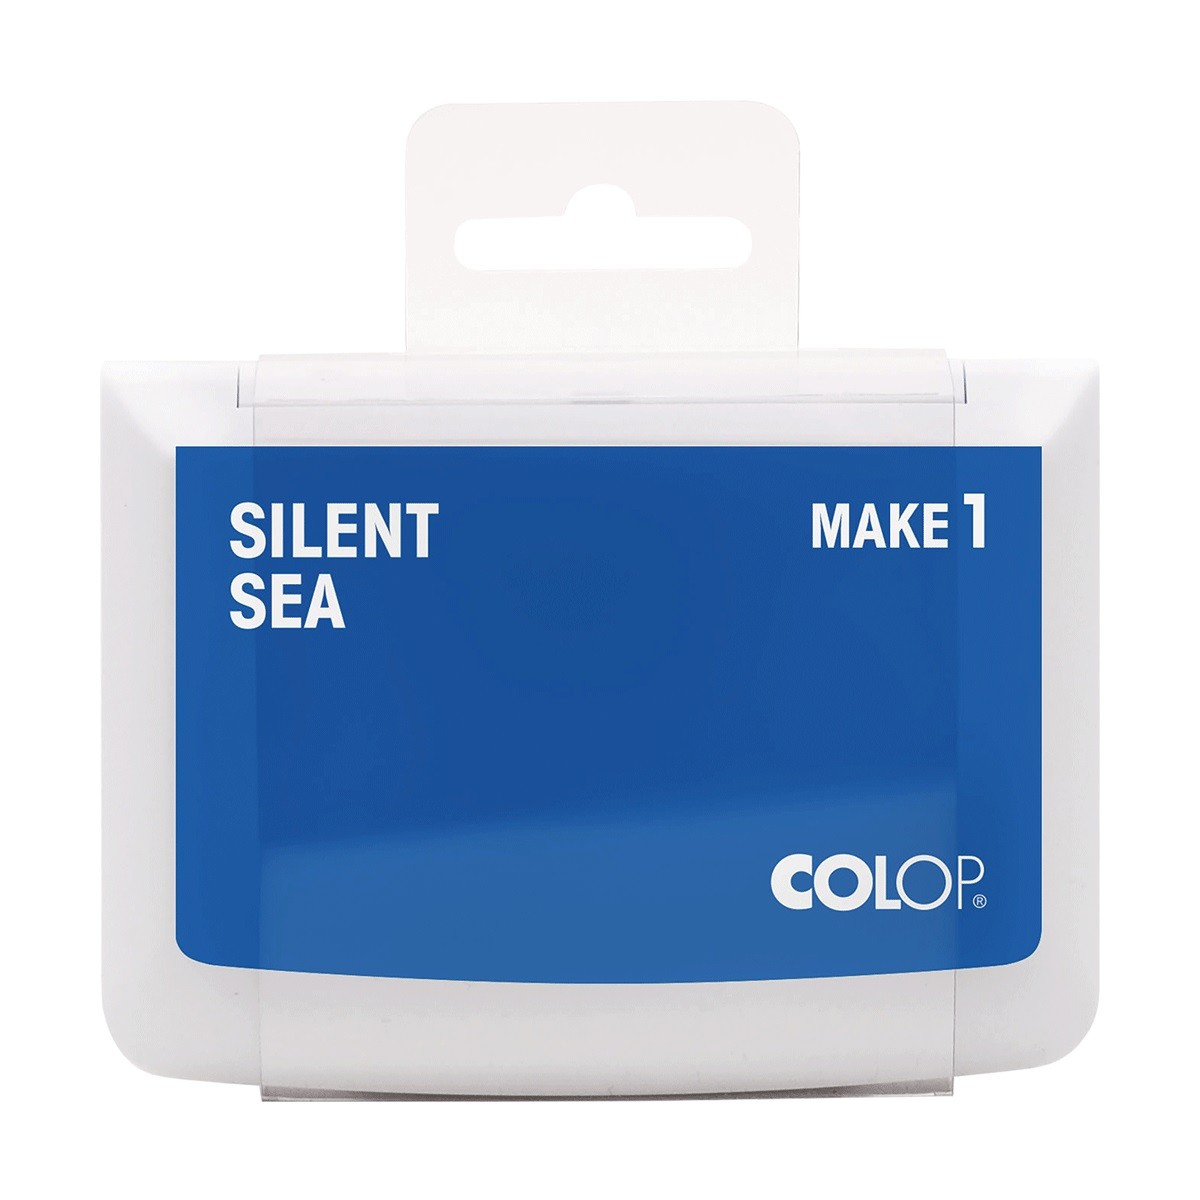 COLOP Arts & Crafts MAKE 1 Ταμπόν Σφραγίδας Silent Sea